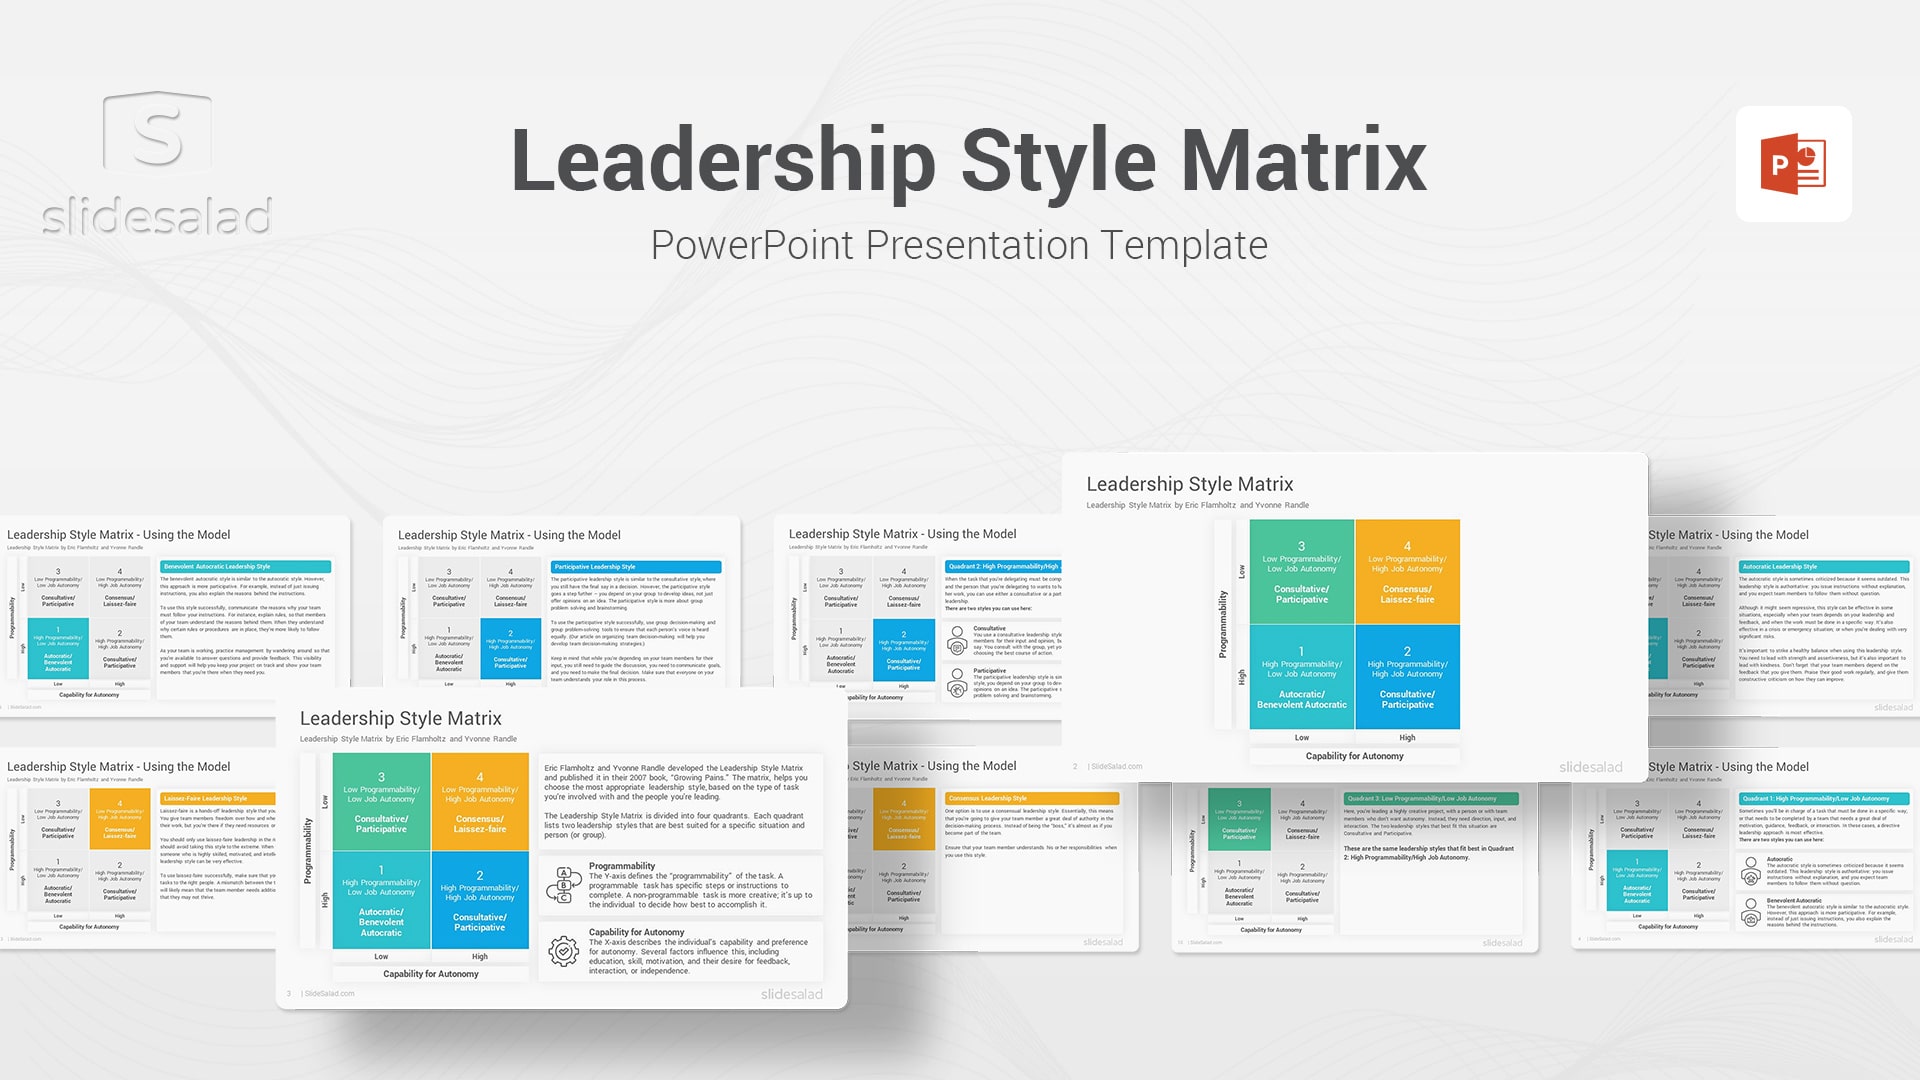 Leadership Style Matrix PowerPoint Template - Multipurpose Corporate Leadership Training PPT Template